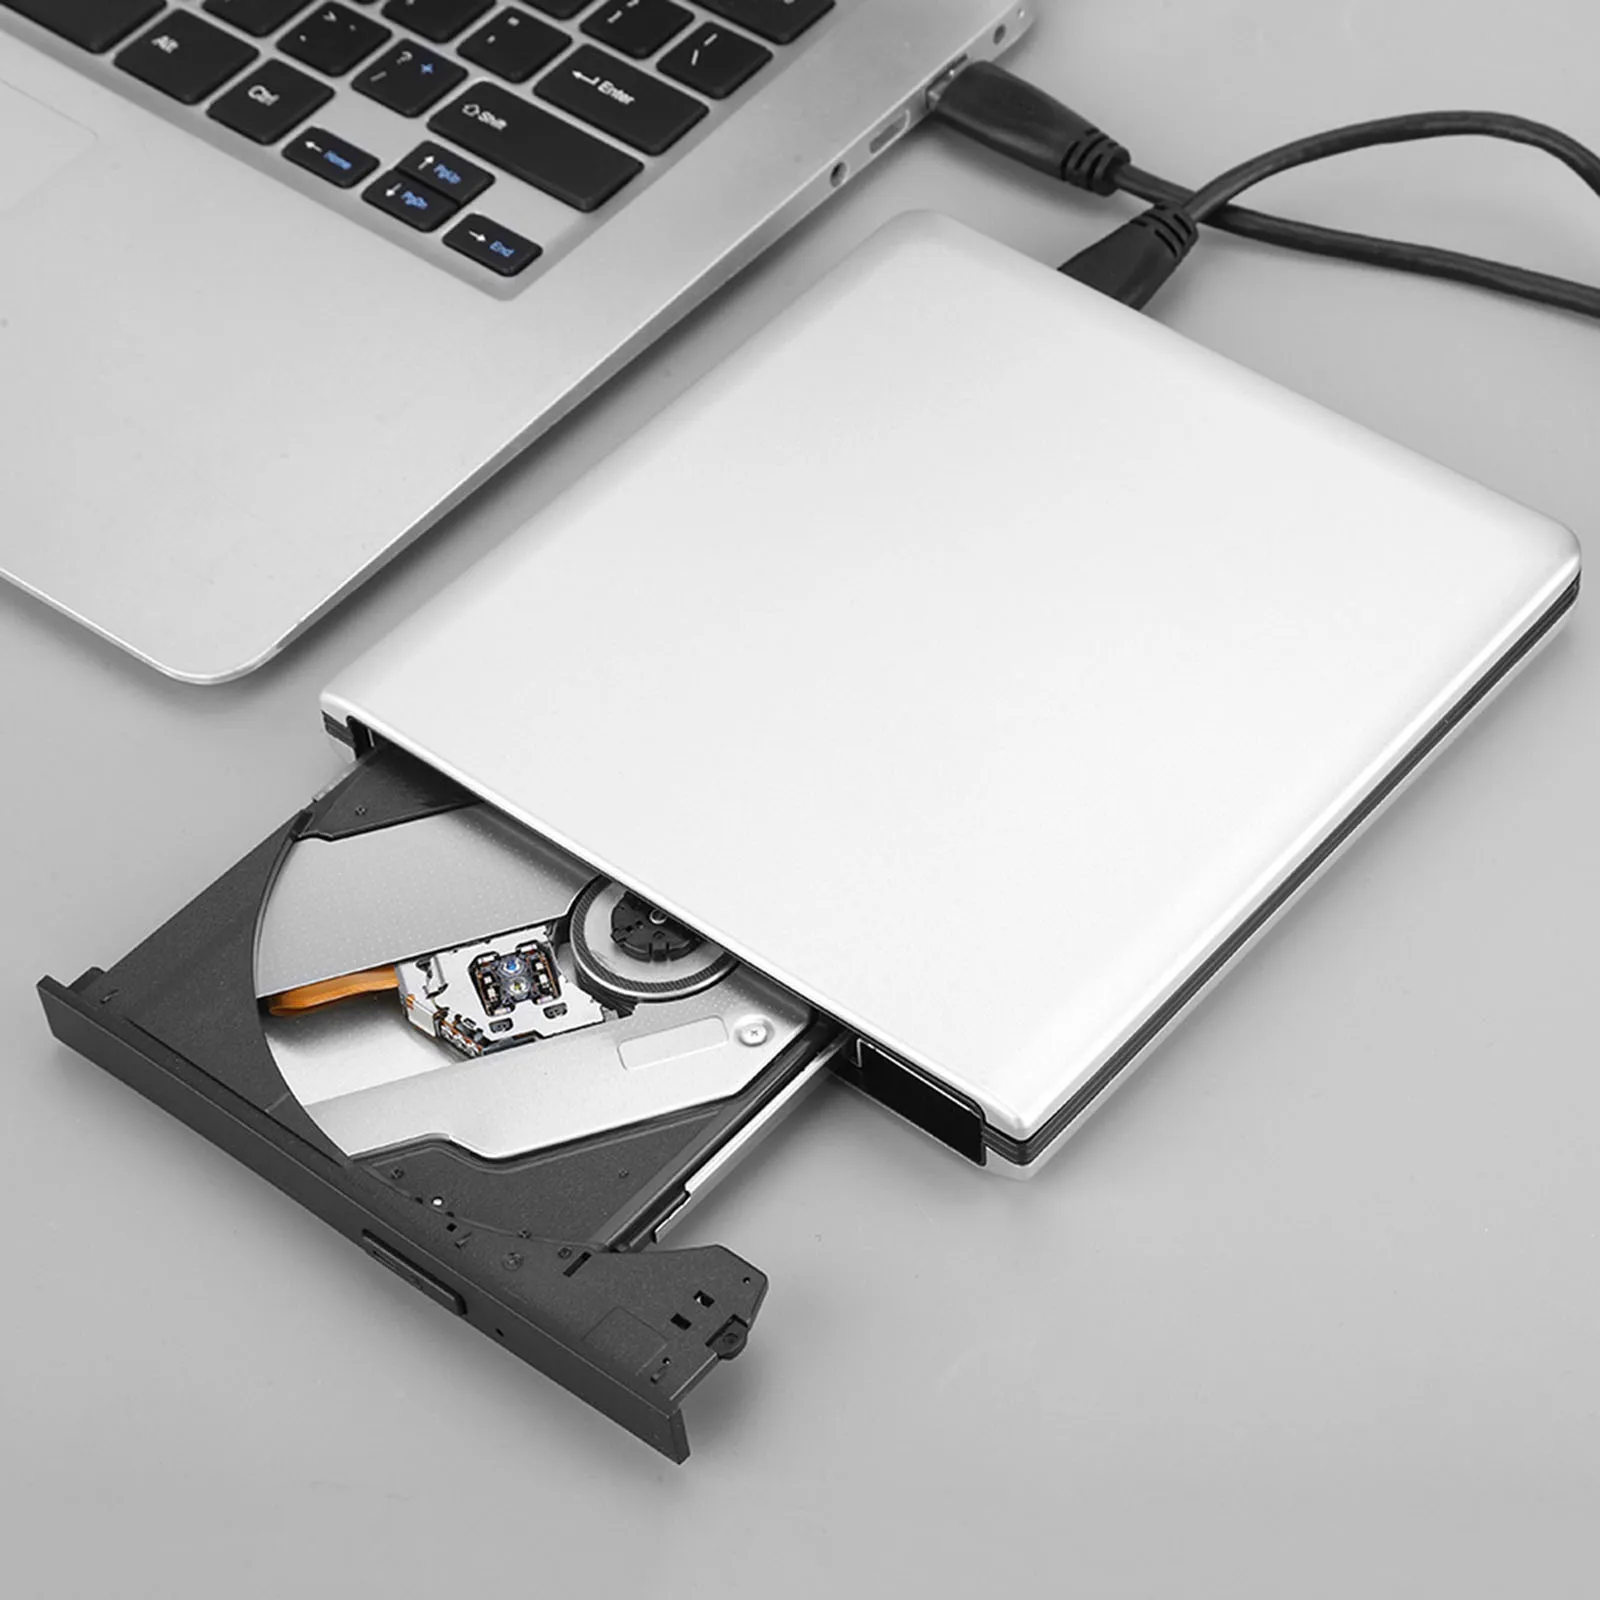     USB 3, 0   Macbook